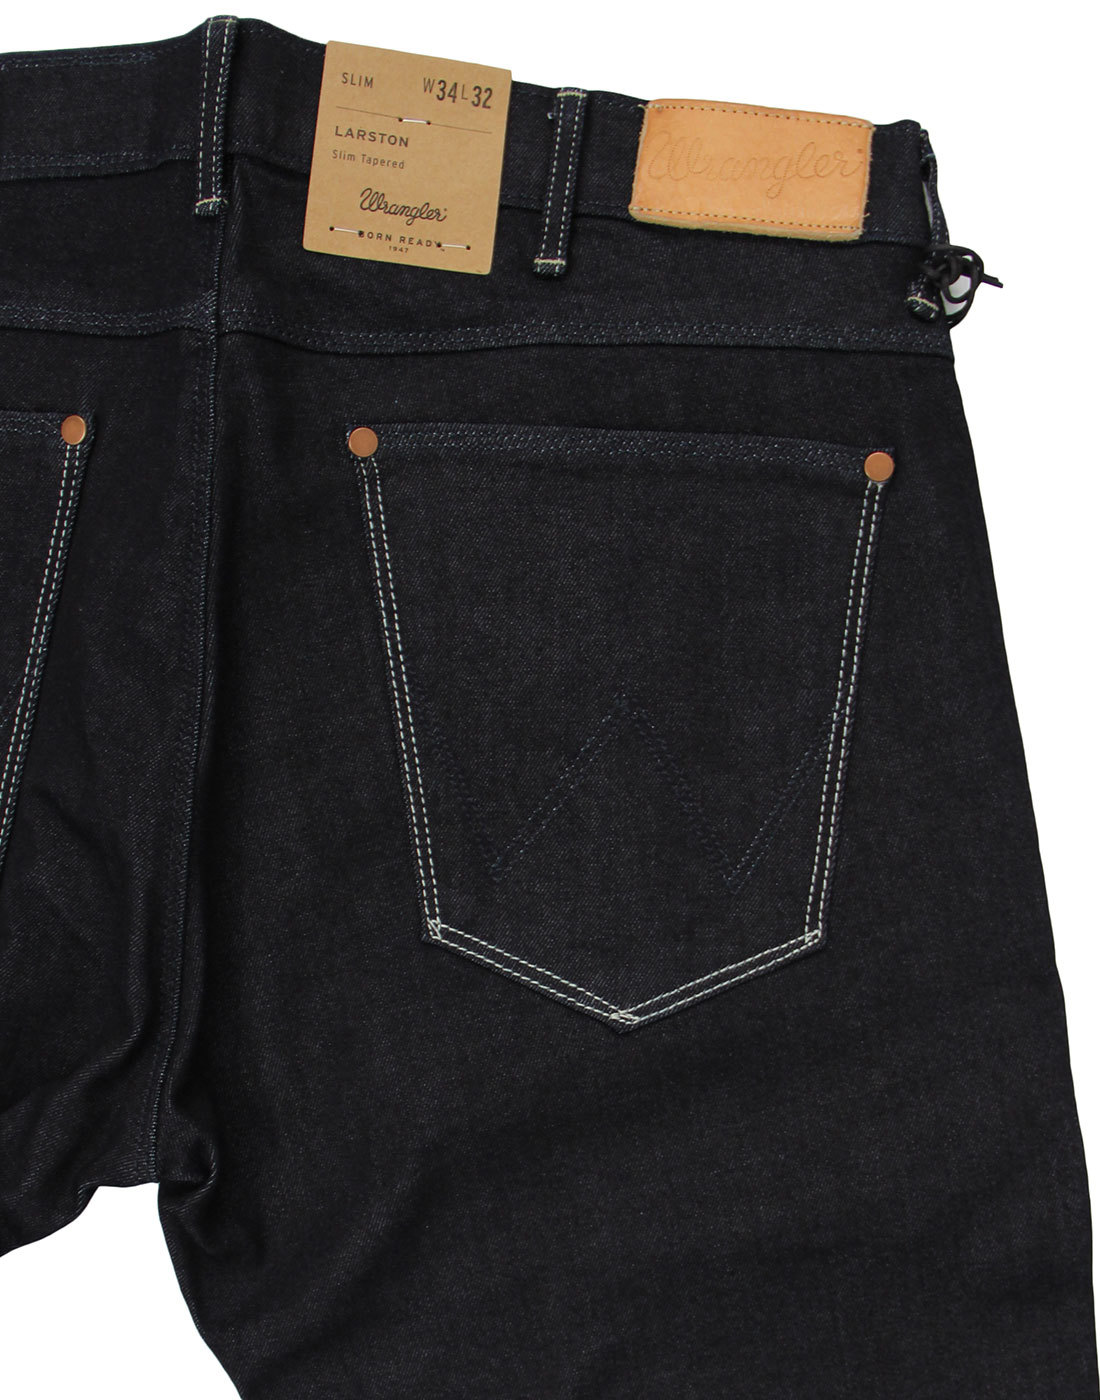 WRANGLER Larston Retro Mod Slim Tapered Soft Luxe Denim Jeans